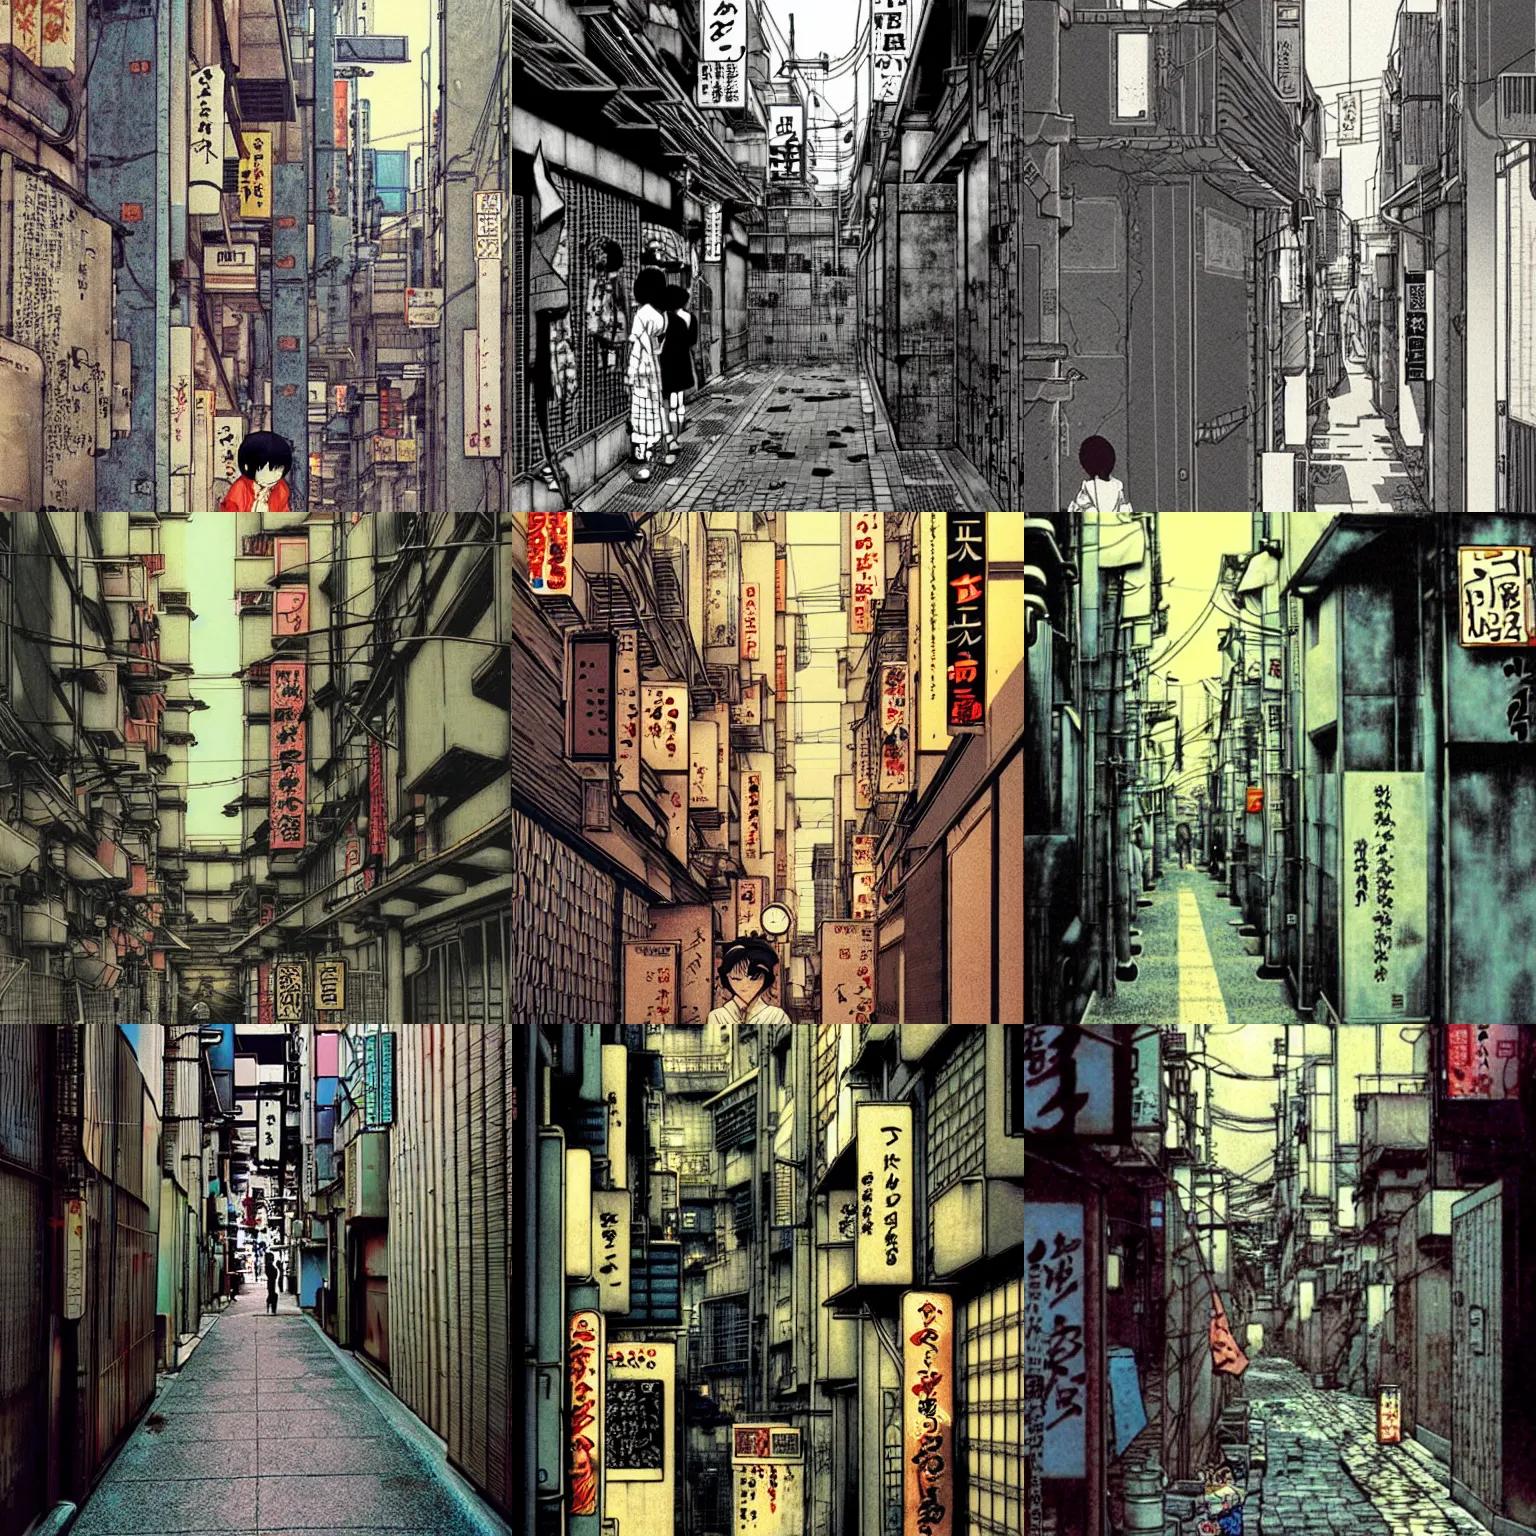 Prompt: tokyo alleyway by satoshi kon, beautiful